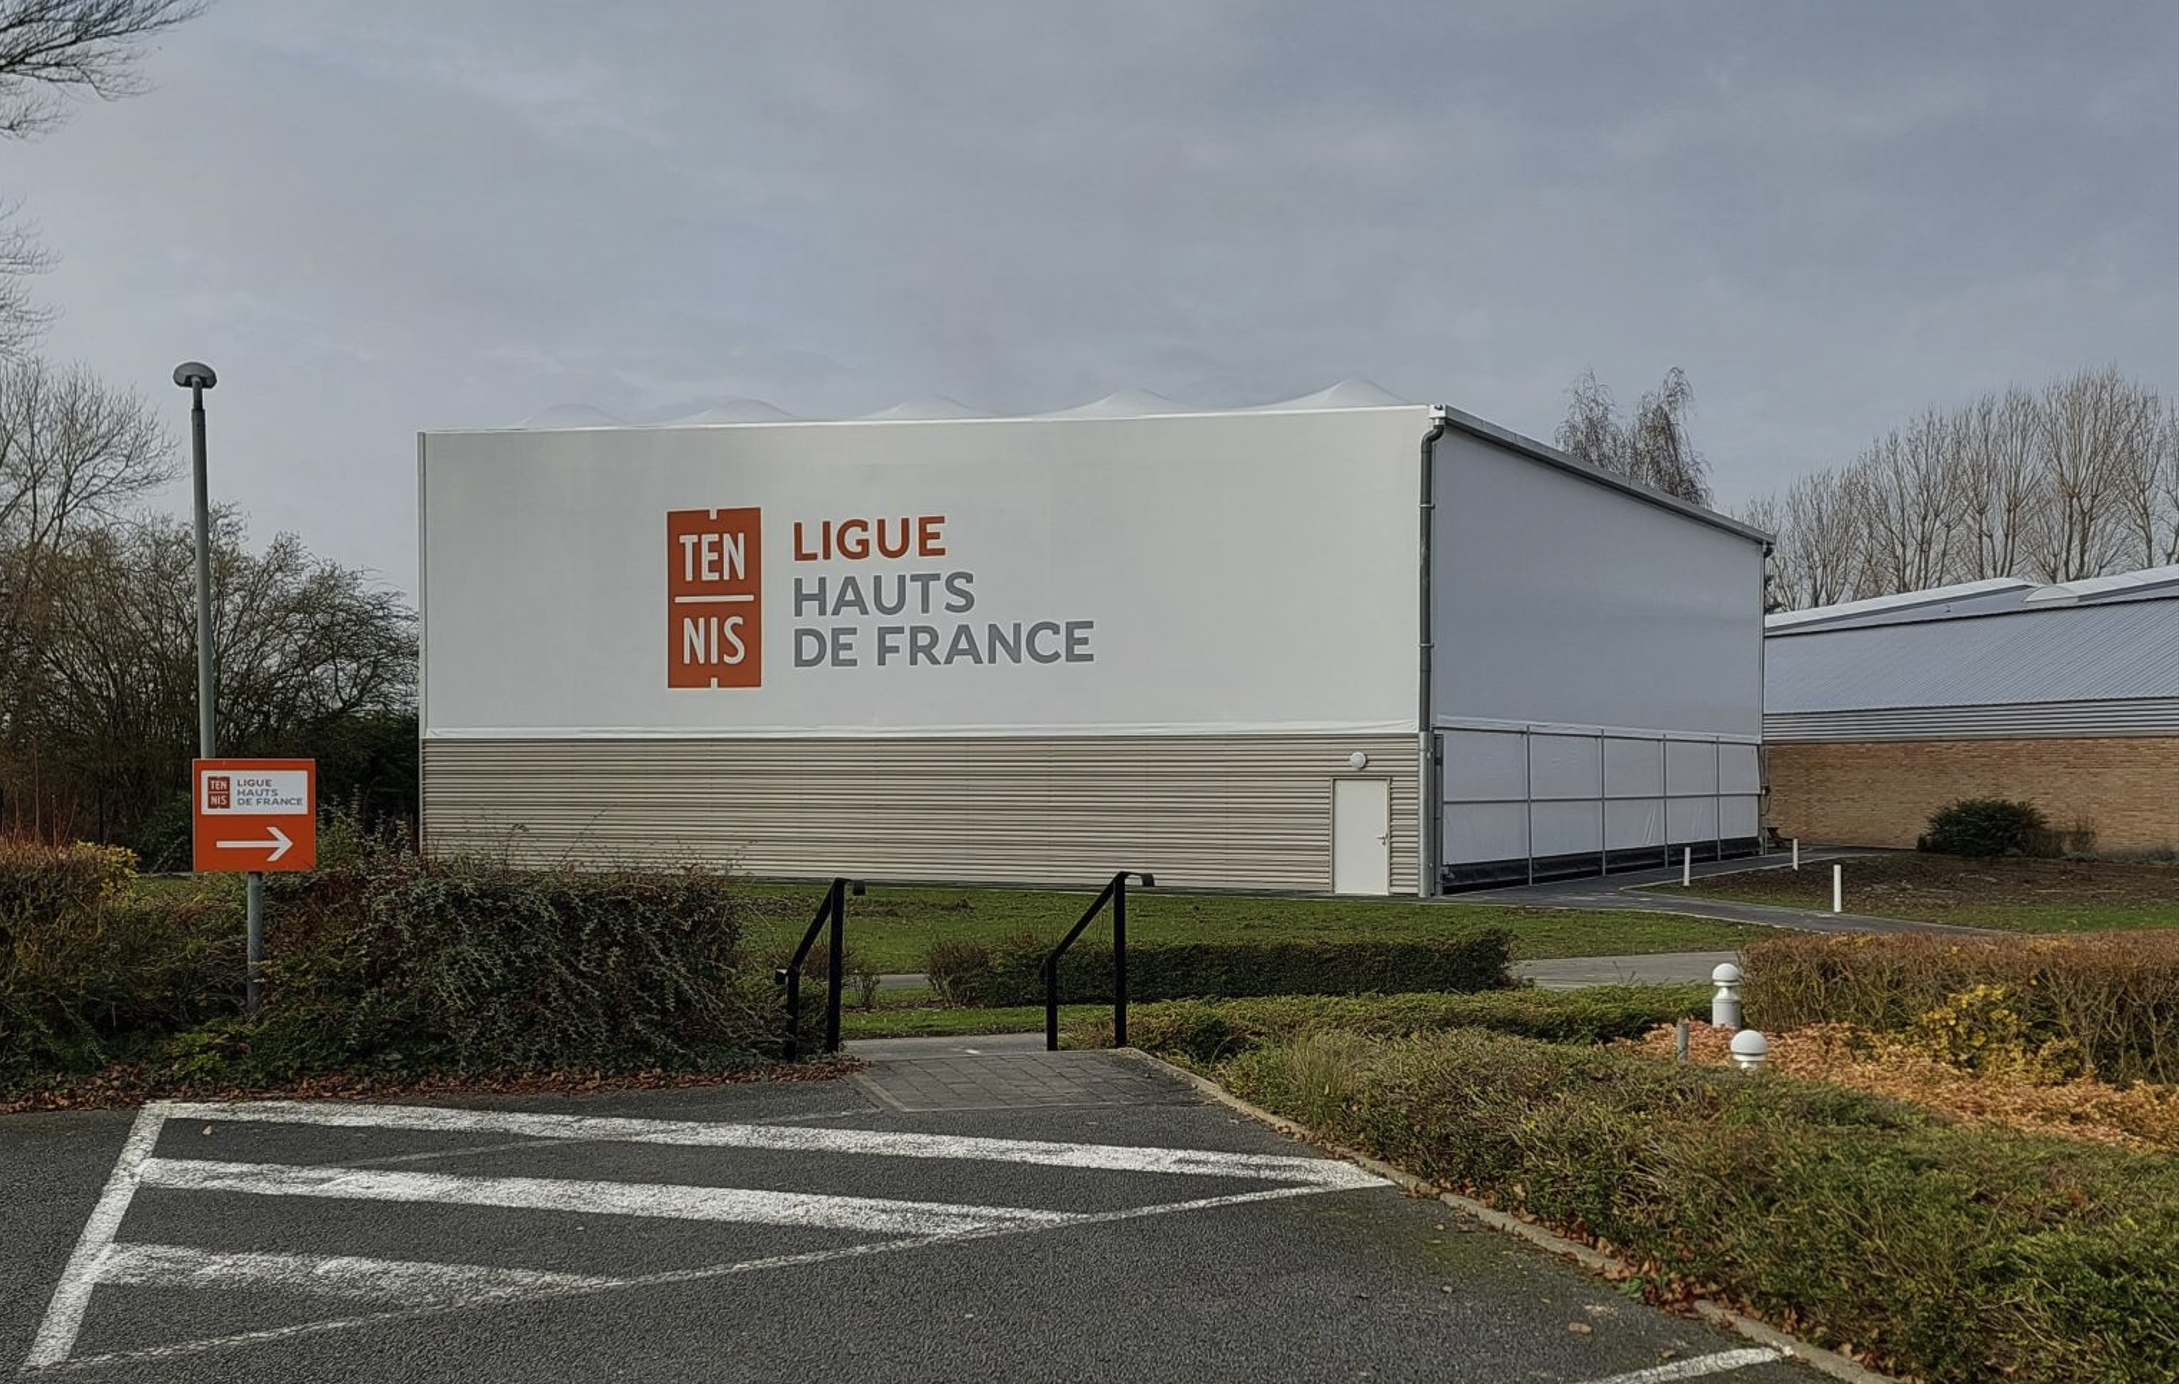 Hauts-de-France League har 2 padel indendørs